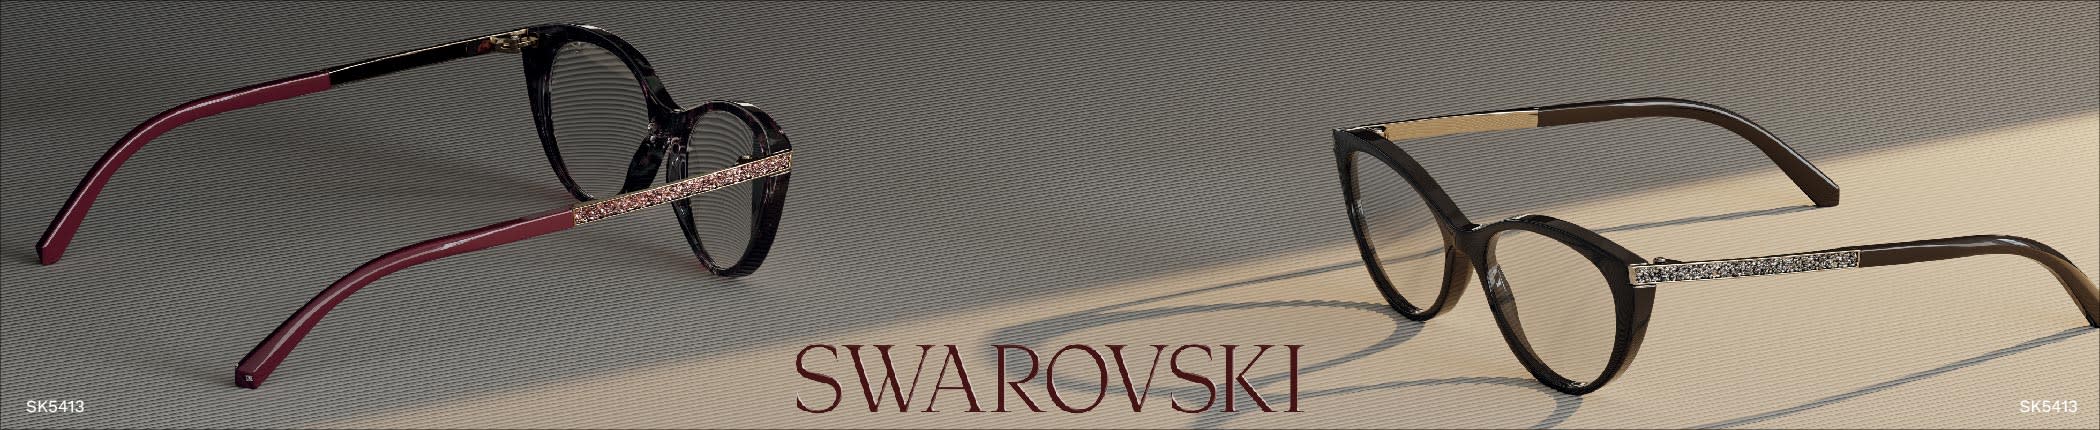 Shop Swarovski Eyeglasses & Sunglasses - featuring SK5413